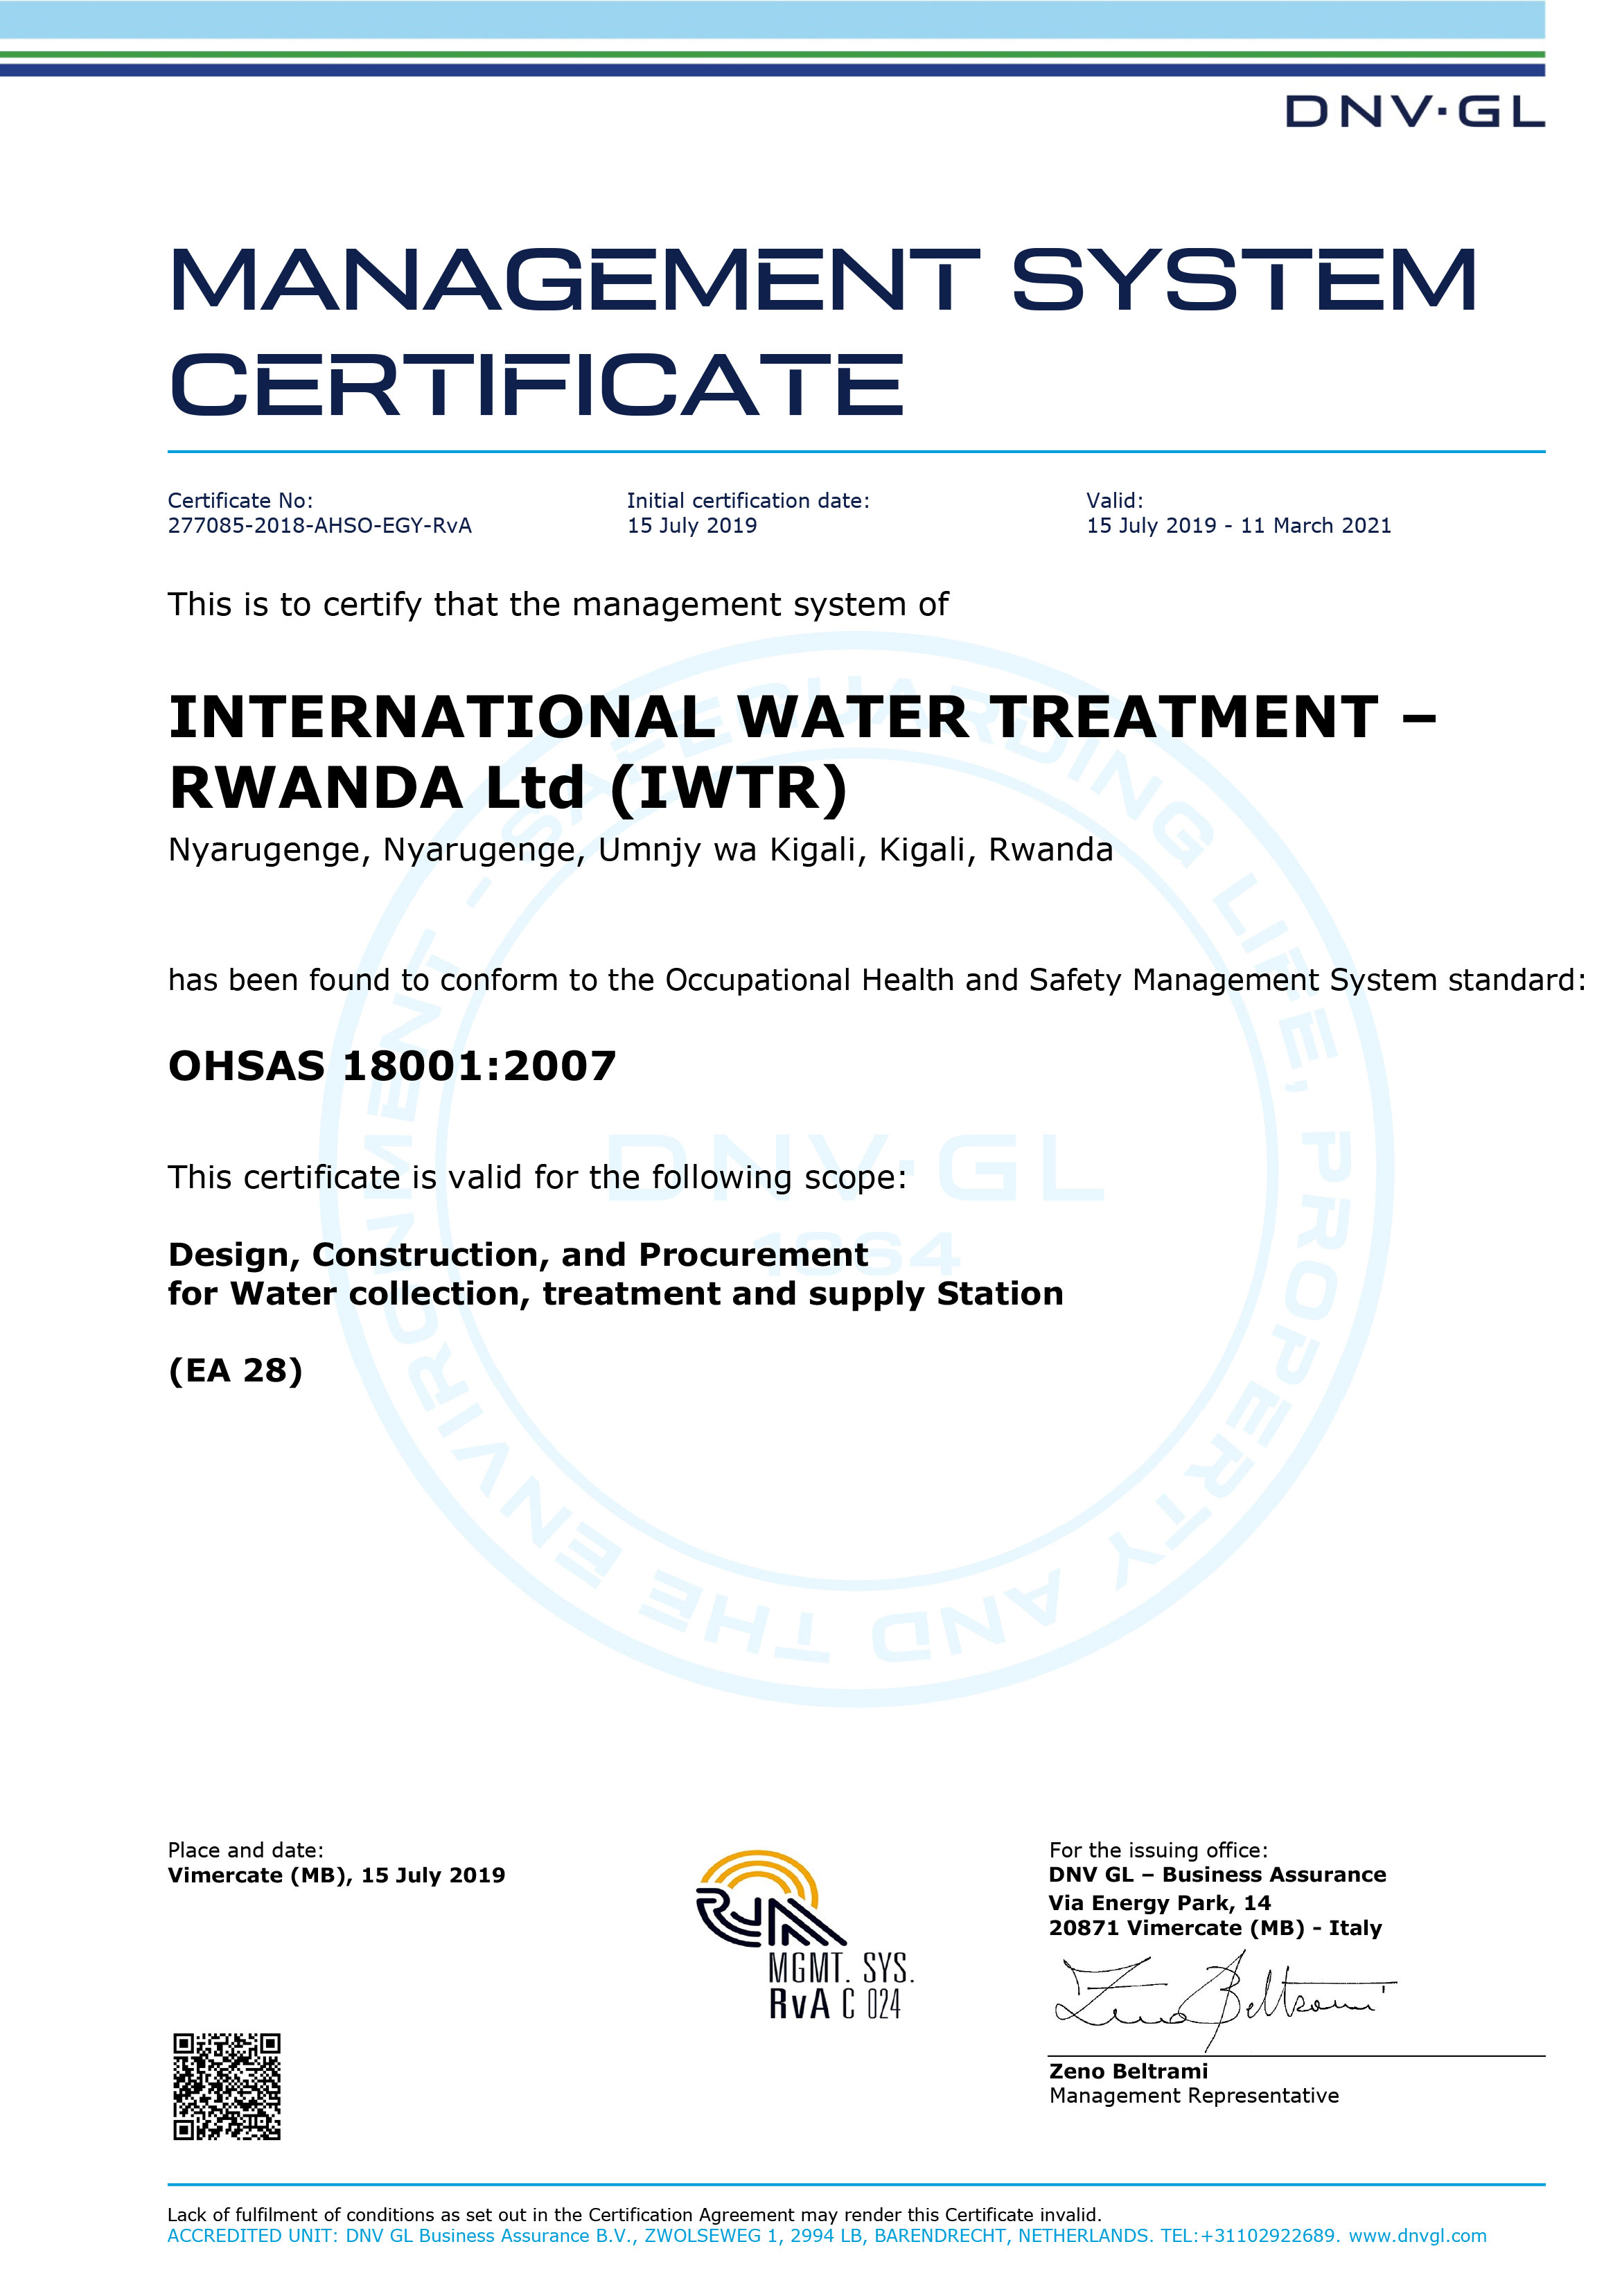 RWANDA Ltd (IWTR) - OHSAS